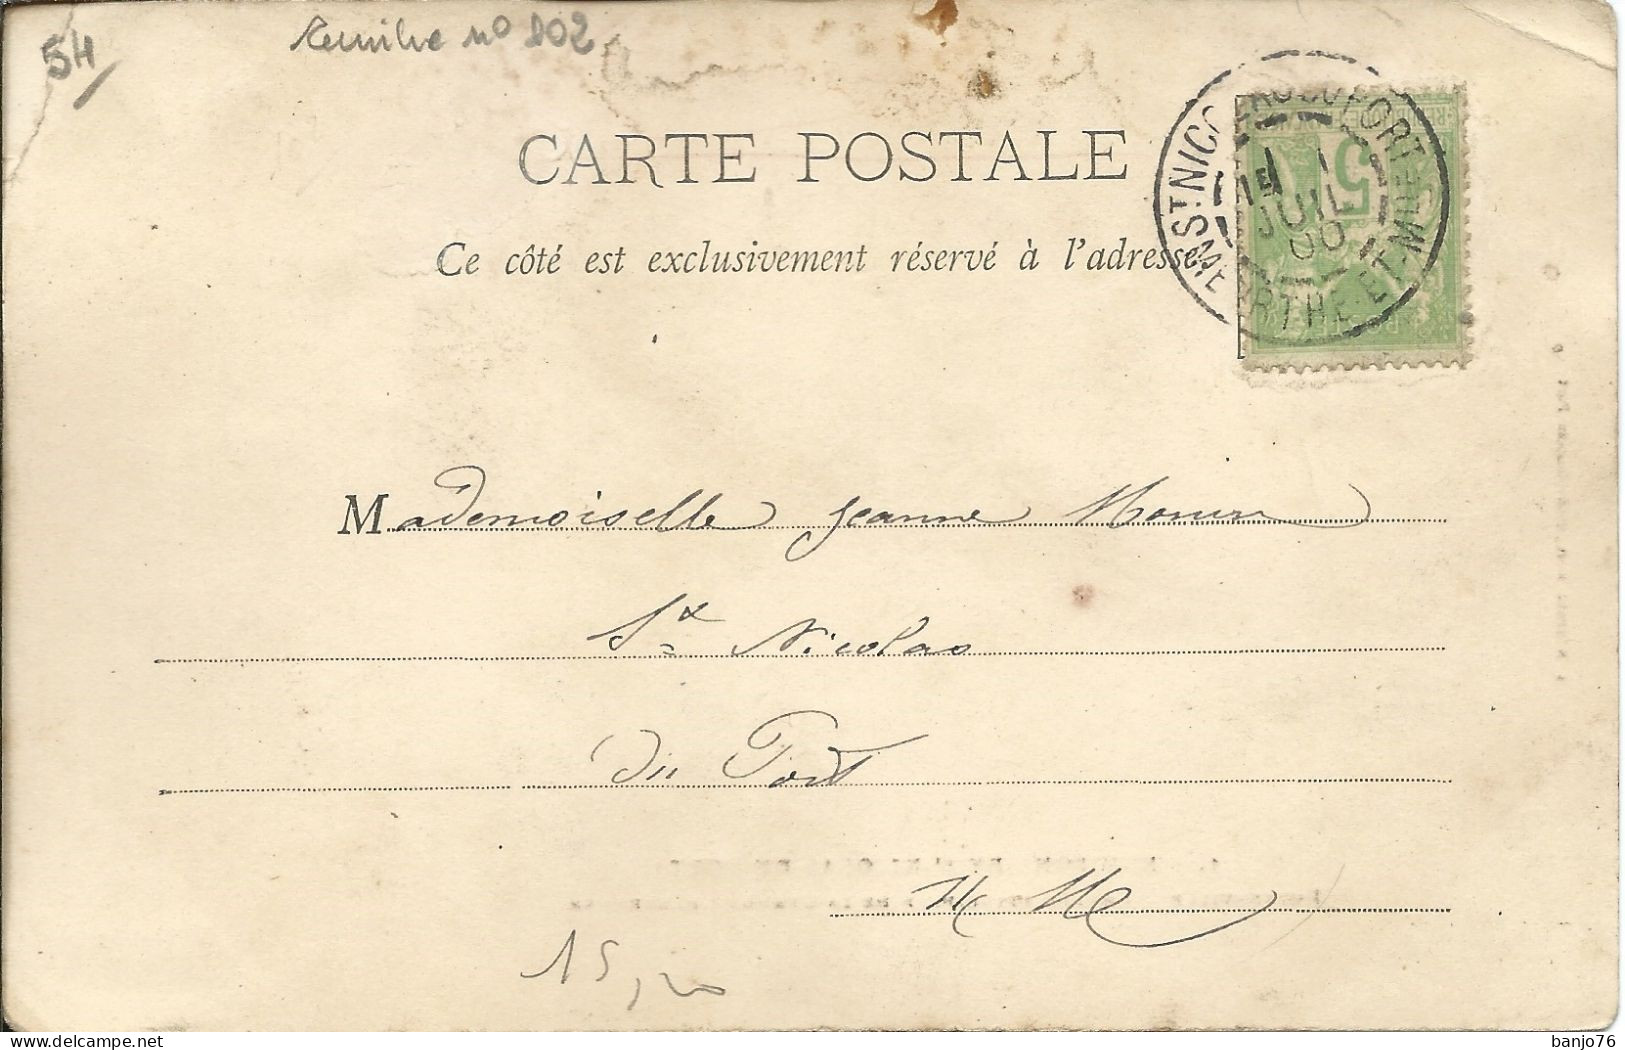 Environs De Saint-Nicolas-de-Port (54) - Bosserville - Entrée Principale De La Grande Chartreuse - 1900 - Saint Nicolas De Port